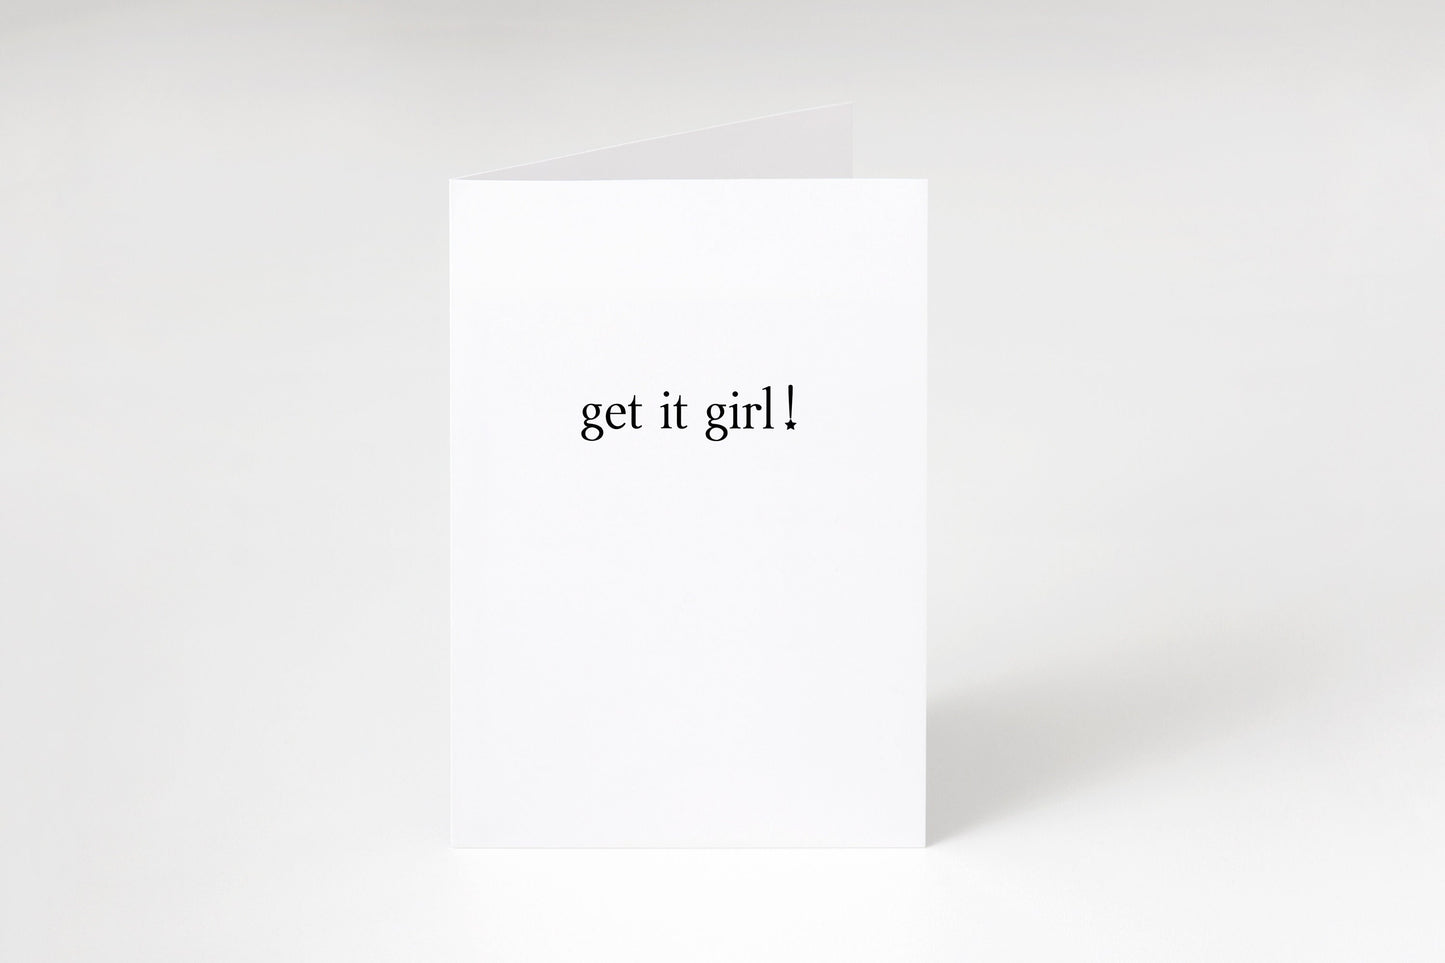 Get it girl greeting card,Best friend card,Congratulations card,Encouraging card,Card for friend,Girl power card,Female empowerment,Feminist